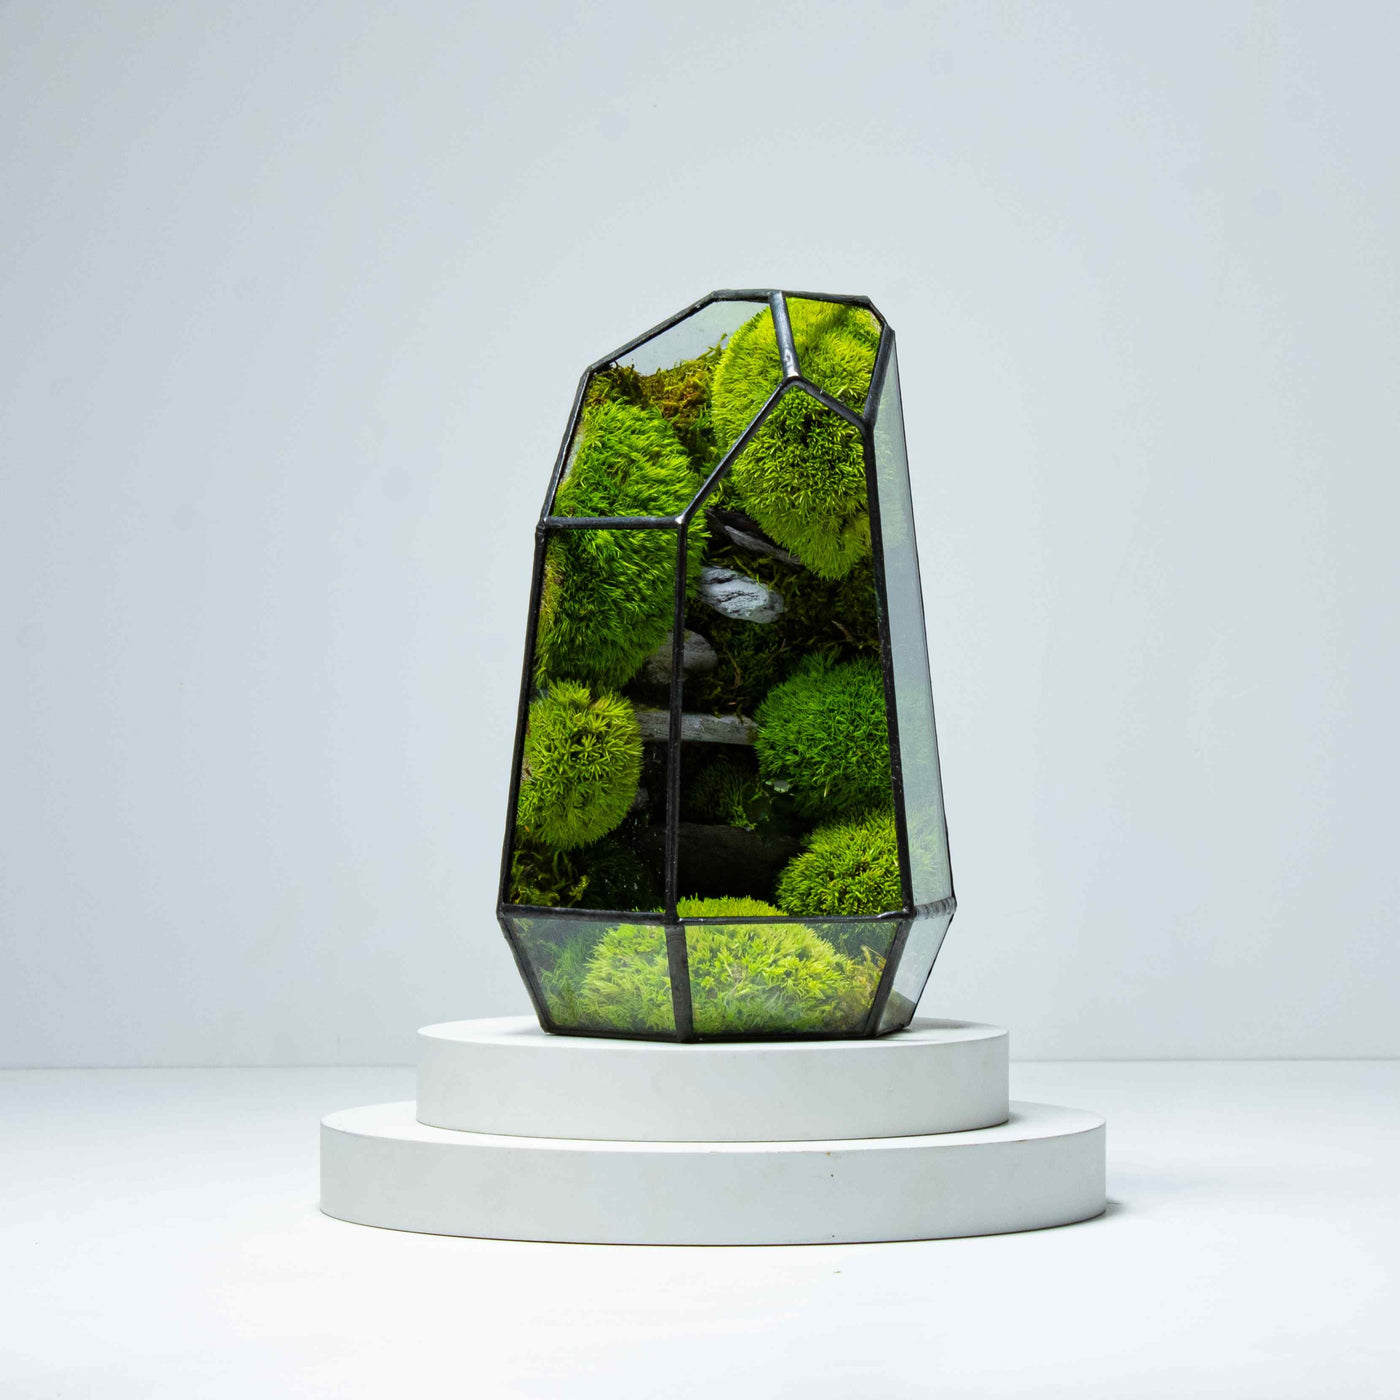 Geometric terrarium centerpiece: Vibrant, preserved greenery in glass.